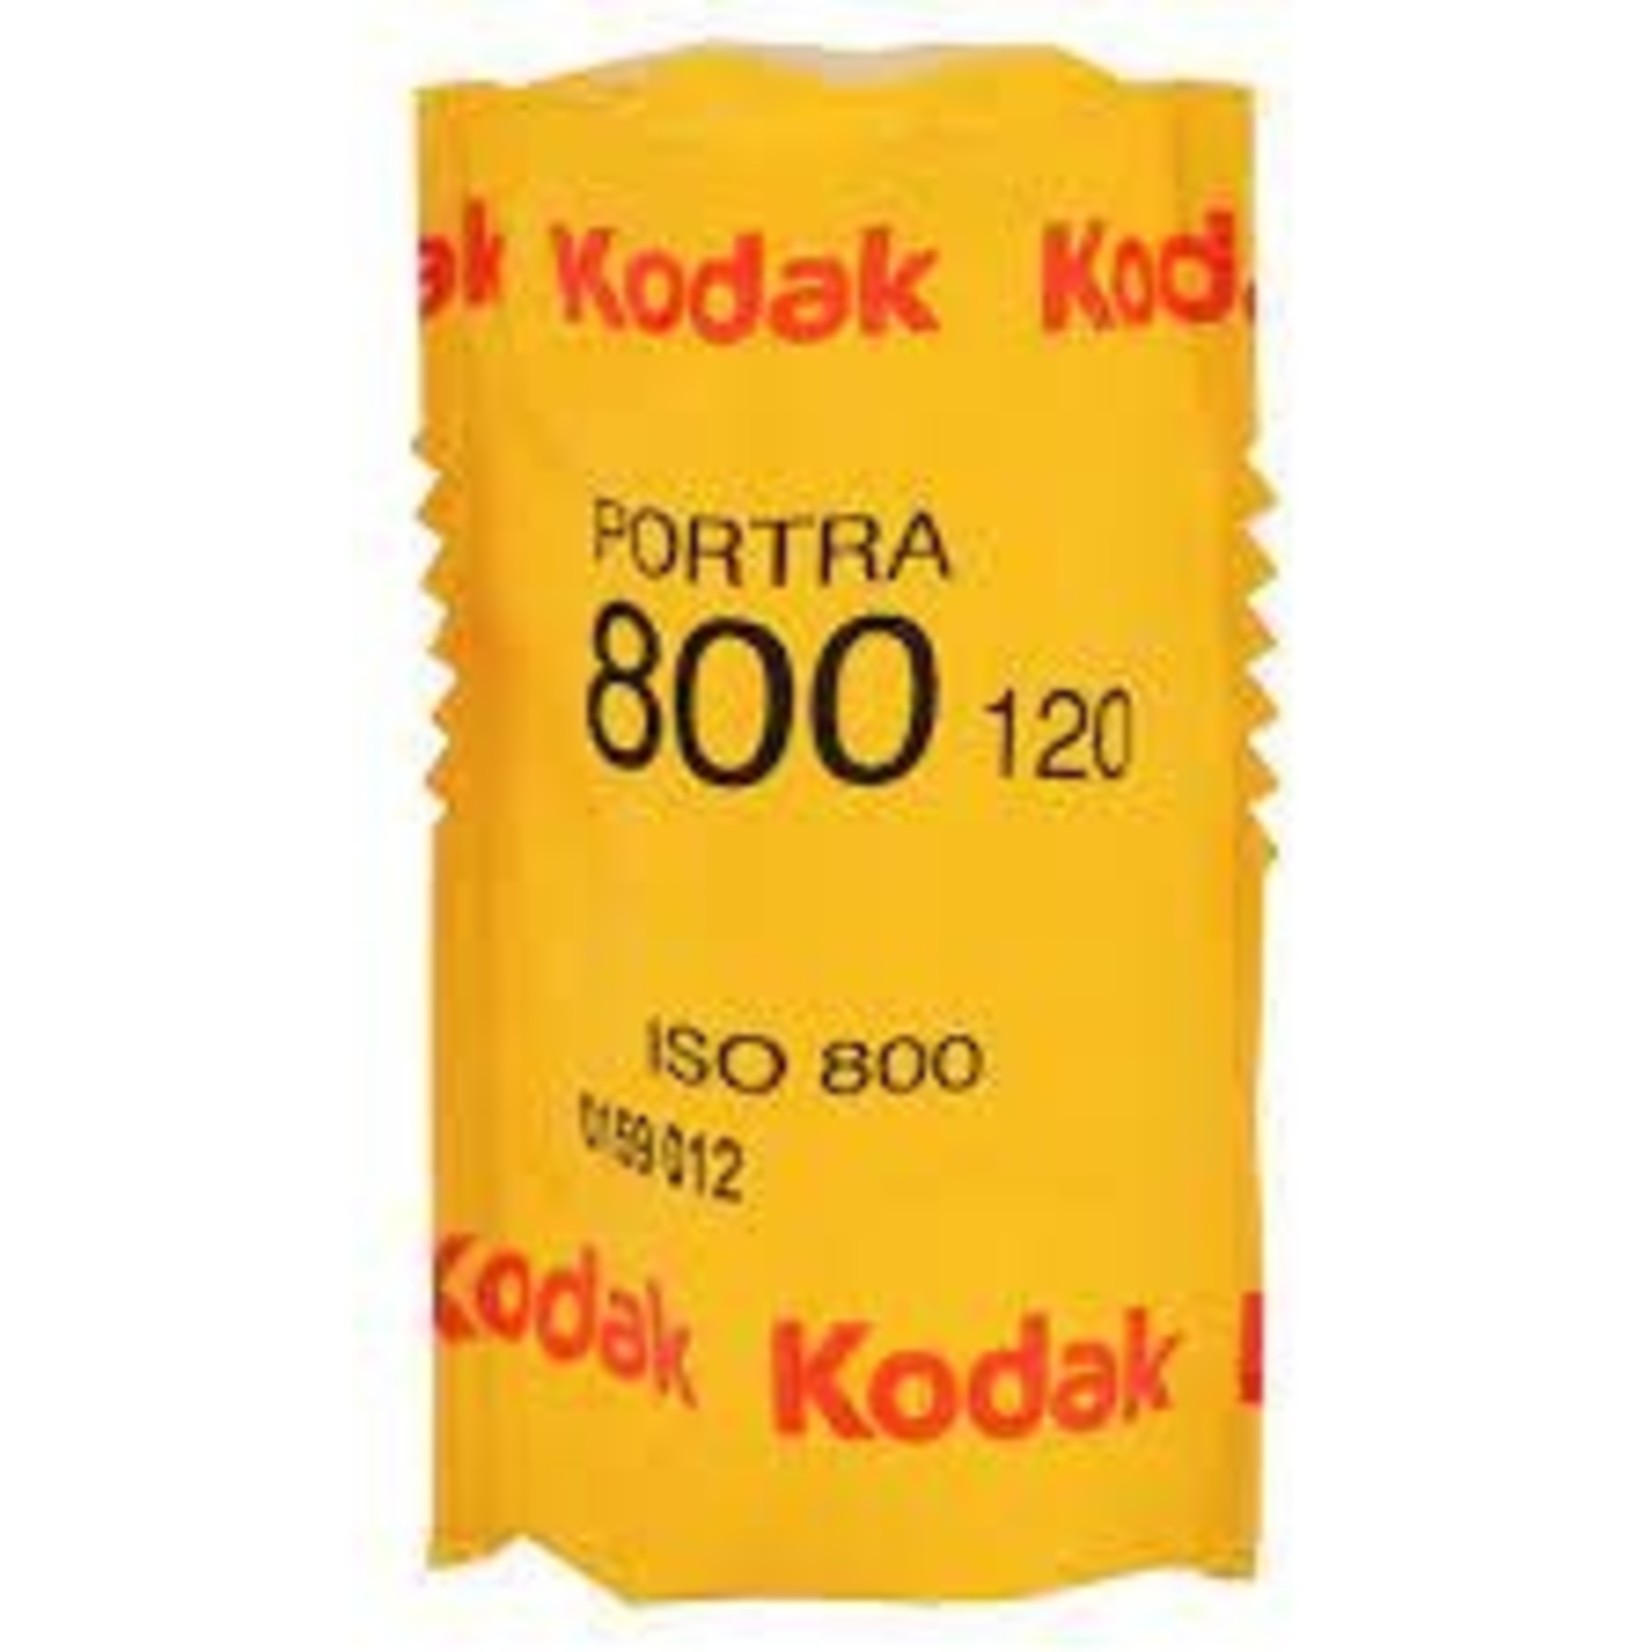 Kodak Kodak Professional Portra 800 Color Negative Film 120 Roll Film